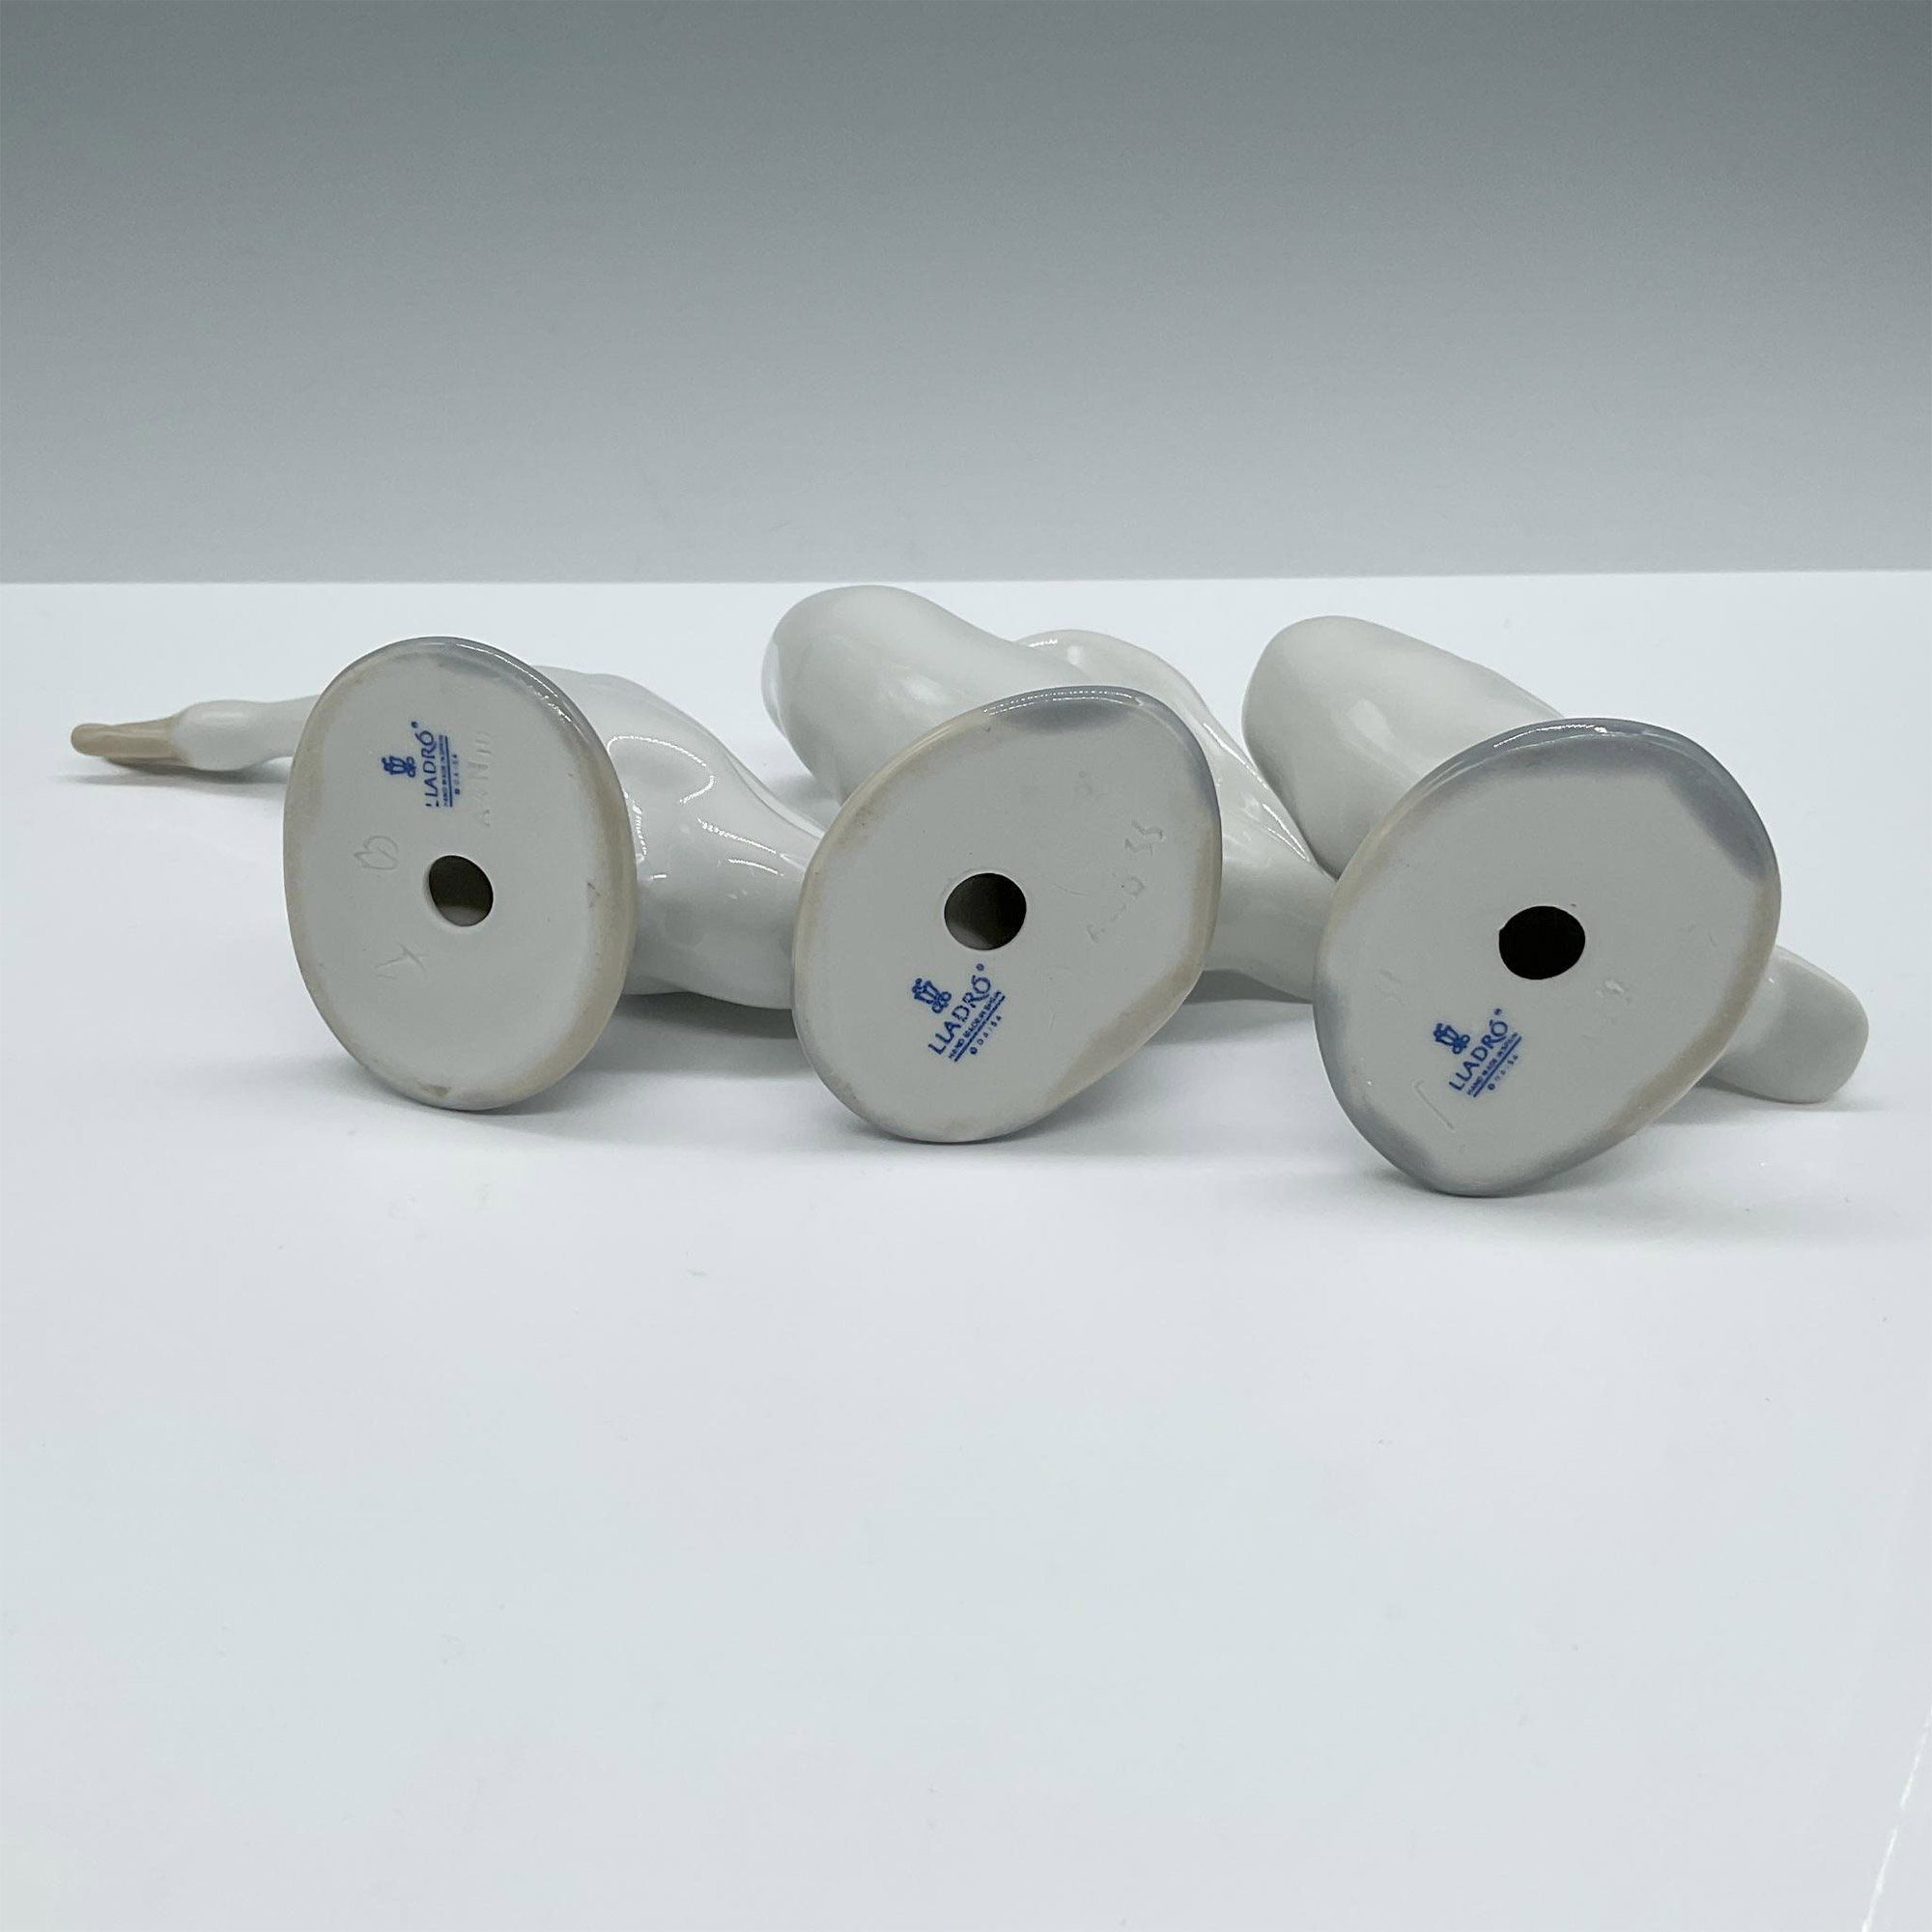 3pc Lladro Porcelain Figurines, Little Ducks - Image 3 of 3